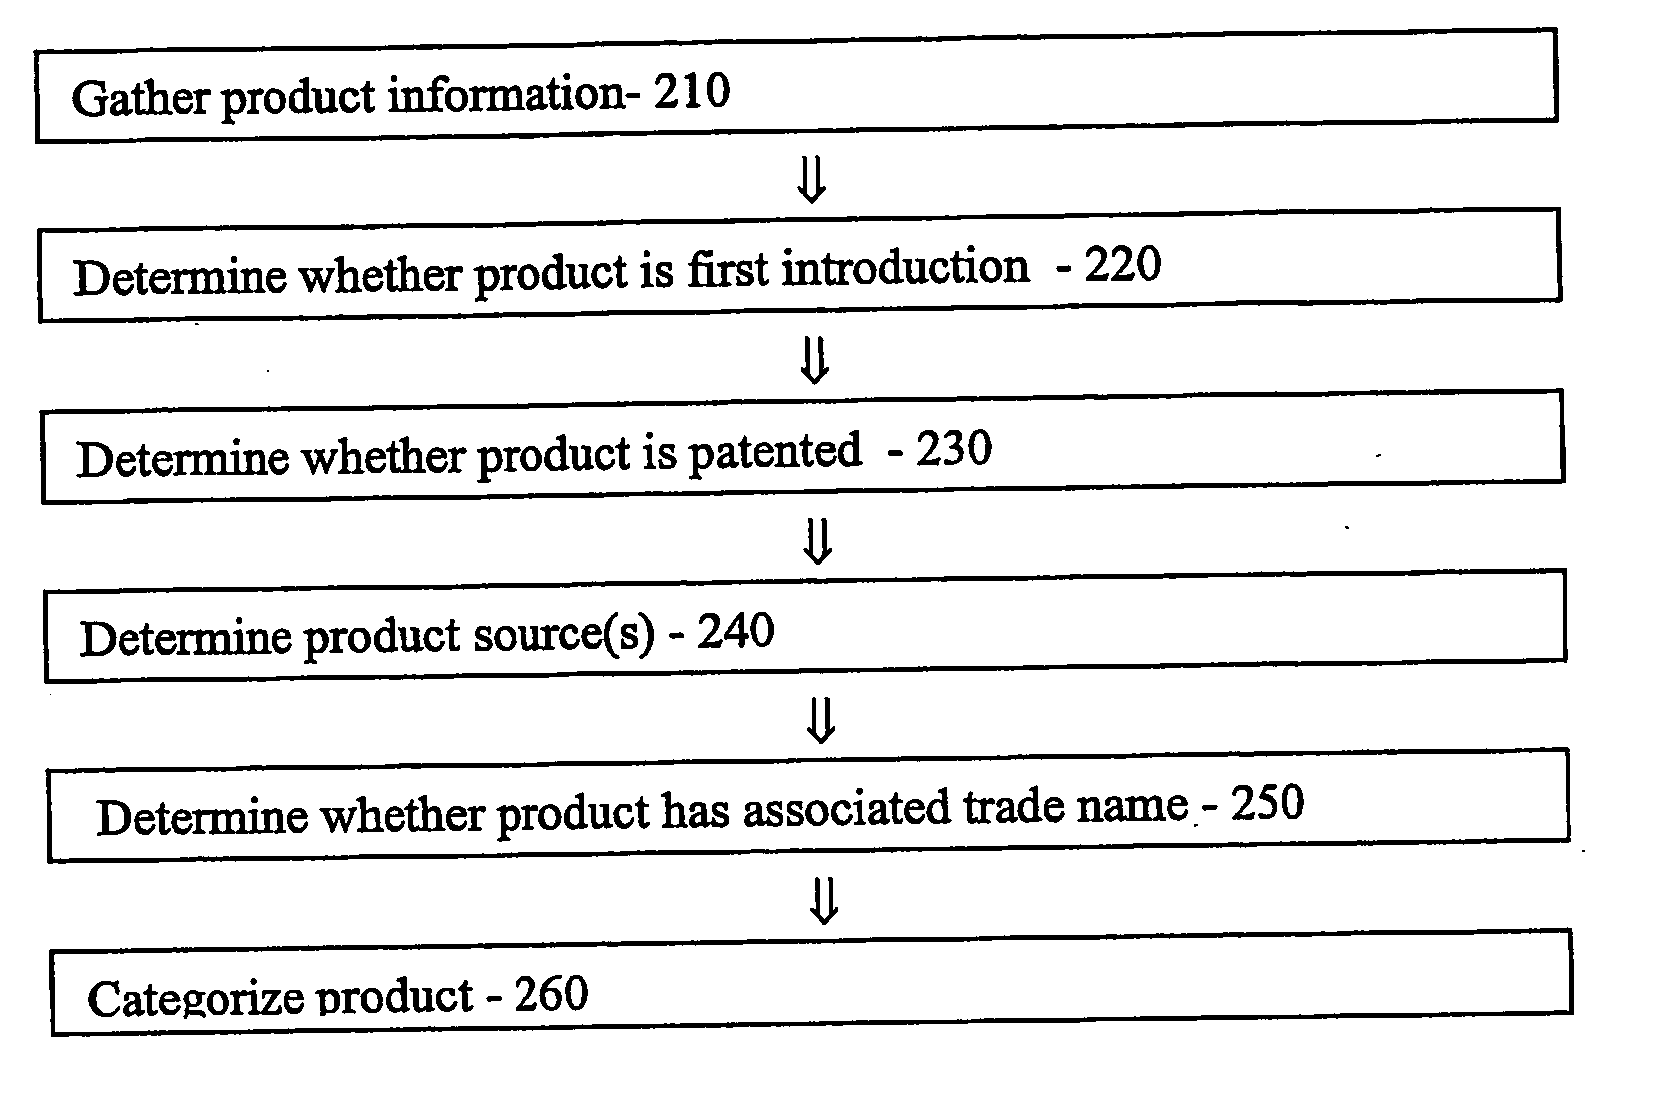 Brand/generic classification system